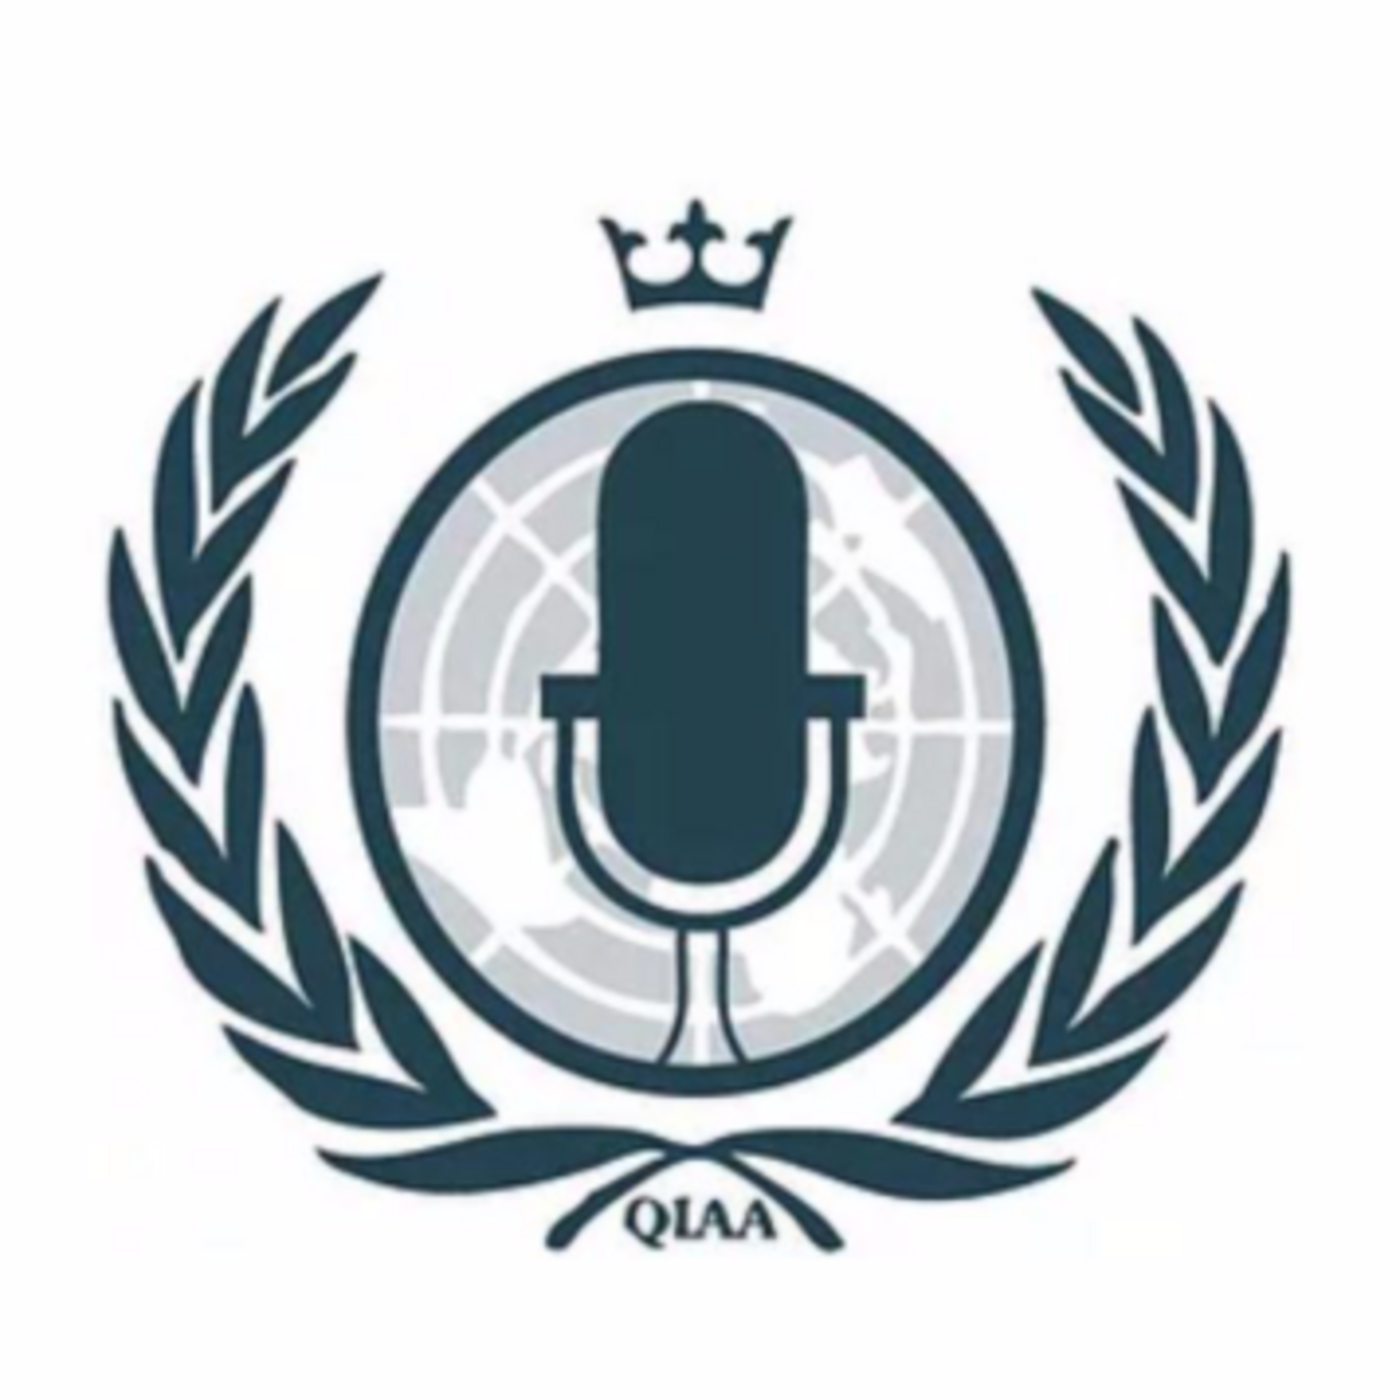 Right of Reply - QIAA - Queen's University